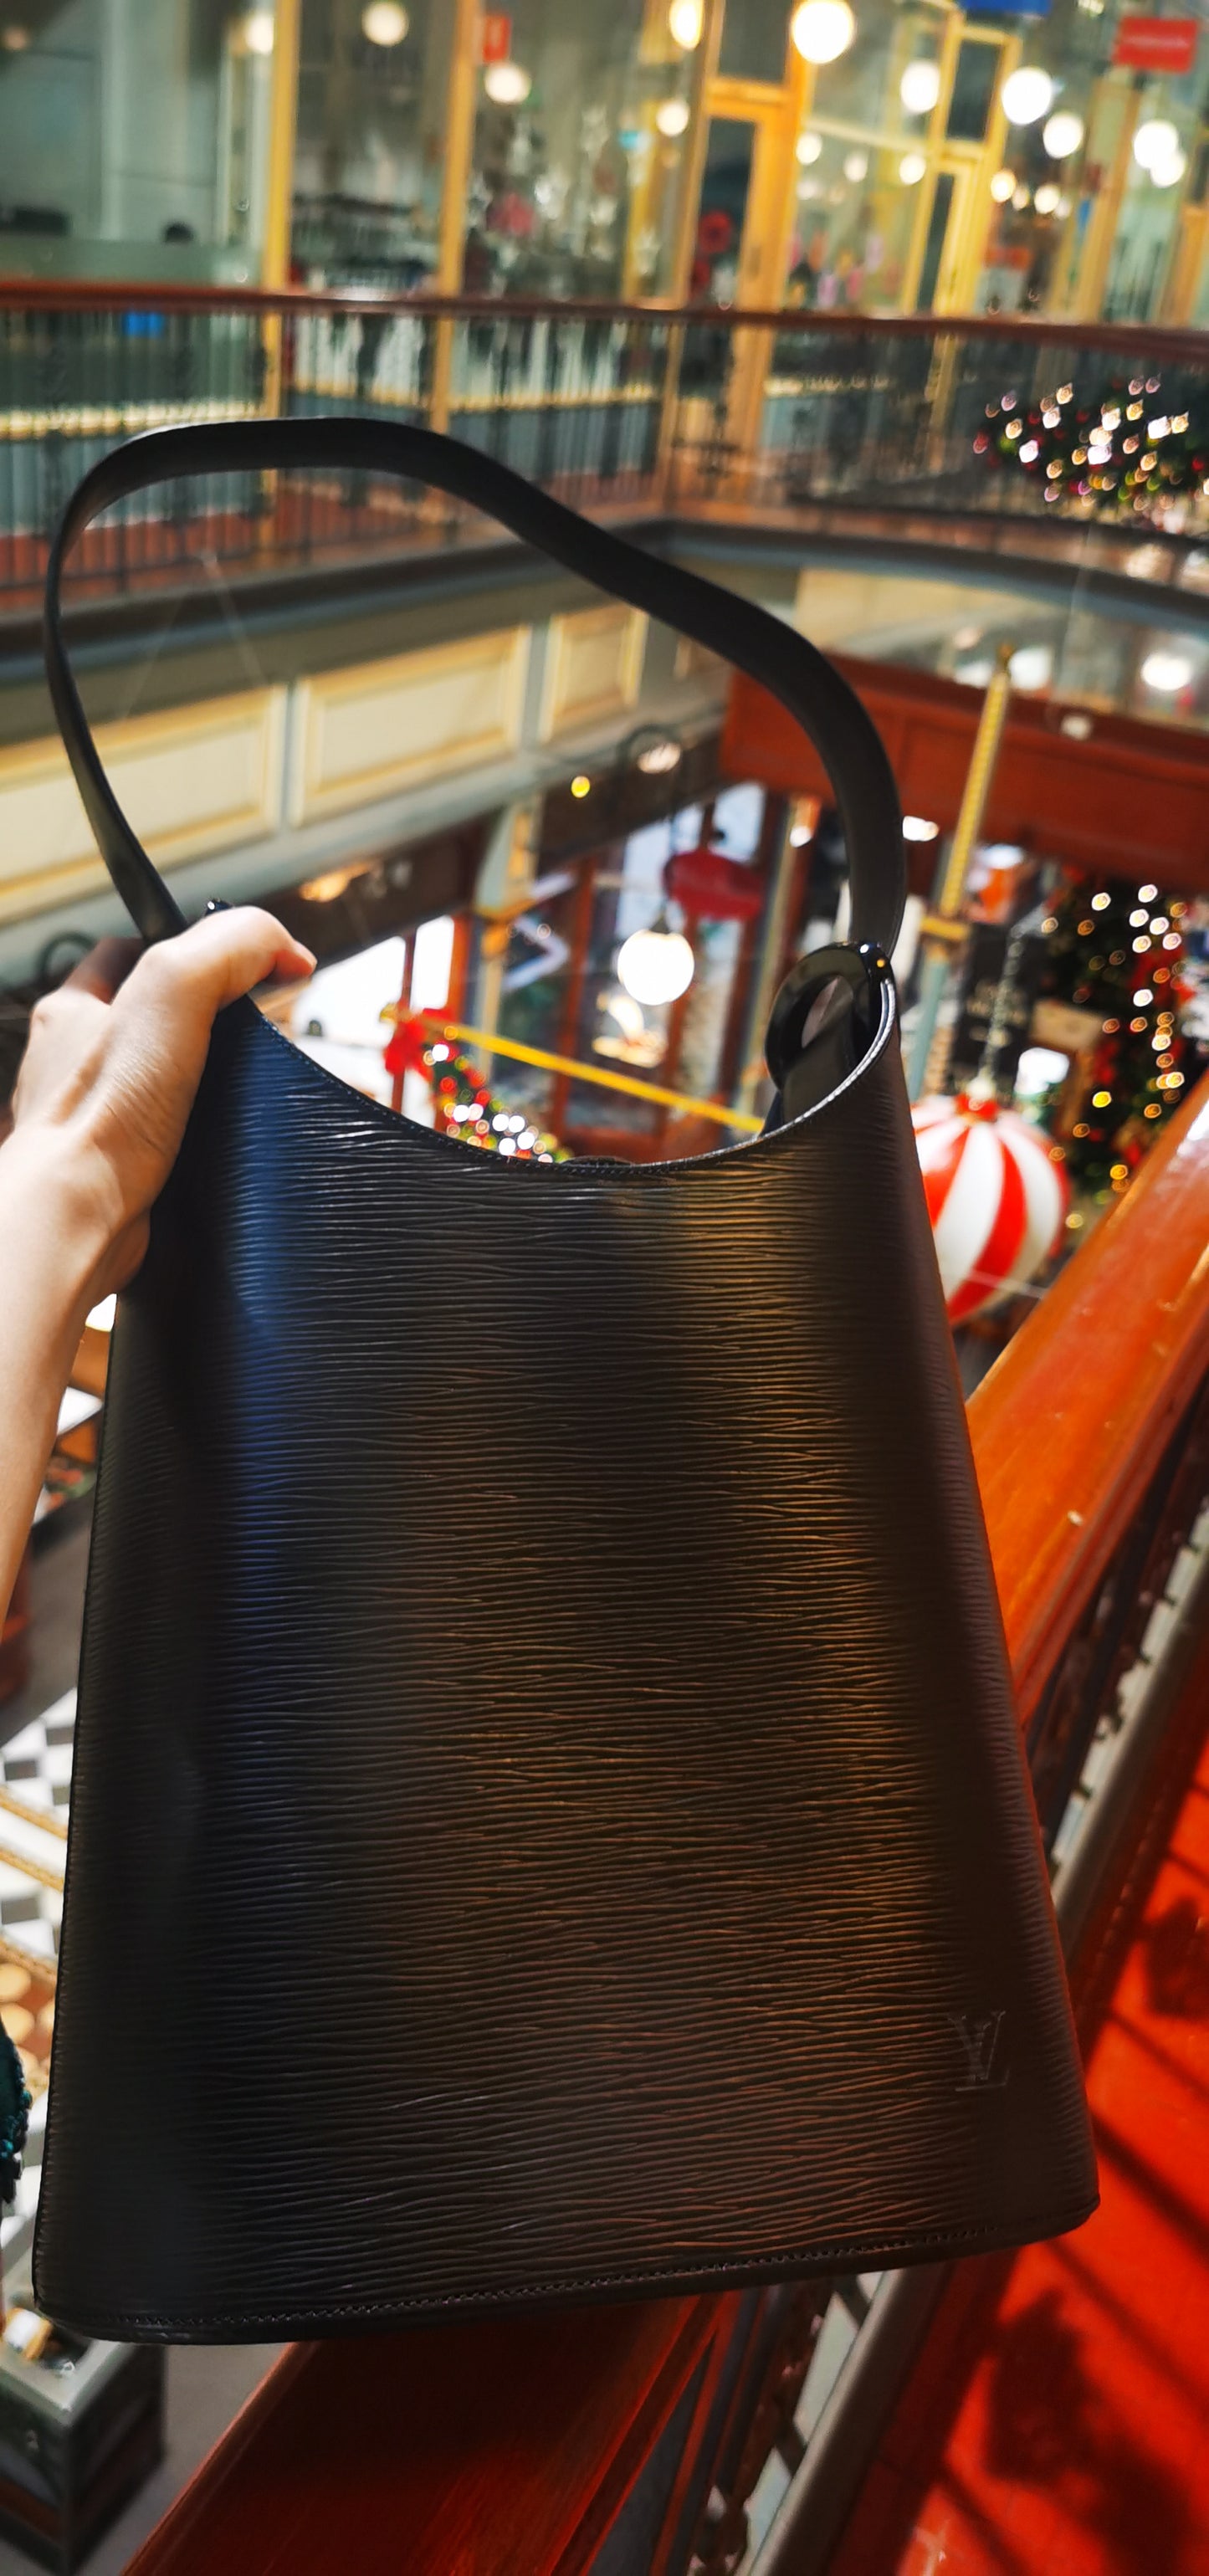 Louis Vuitton Epi Sac Verseau Shoulder Bag